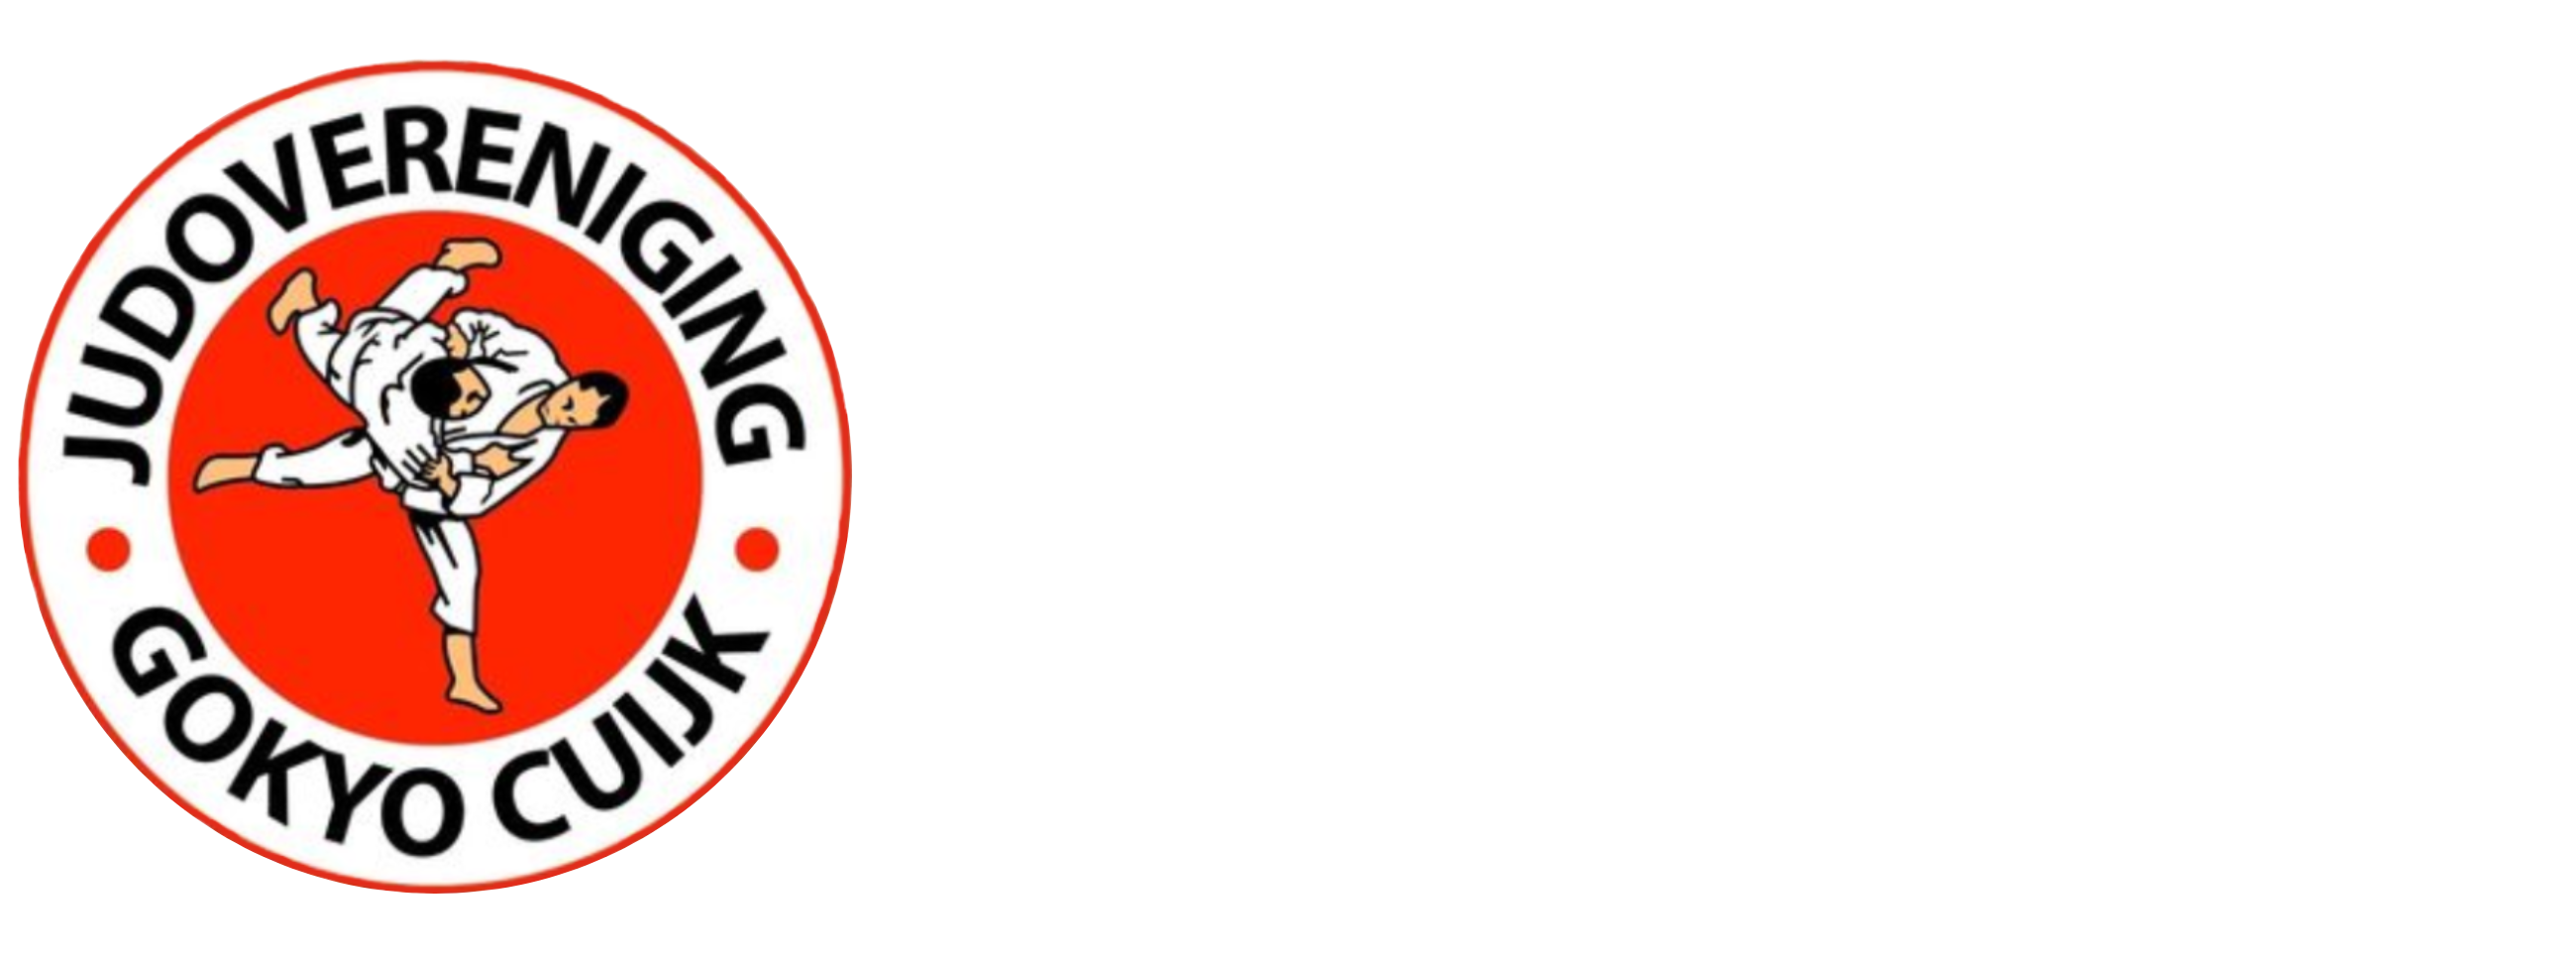 Judo Vereniging Gokyo Cuijk